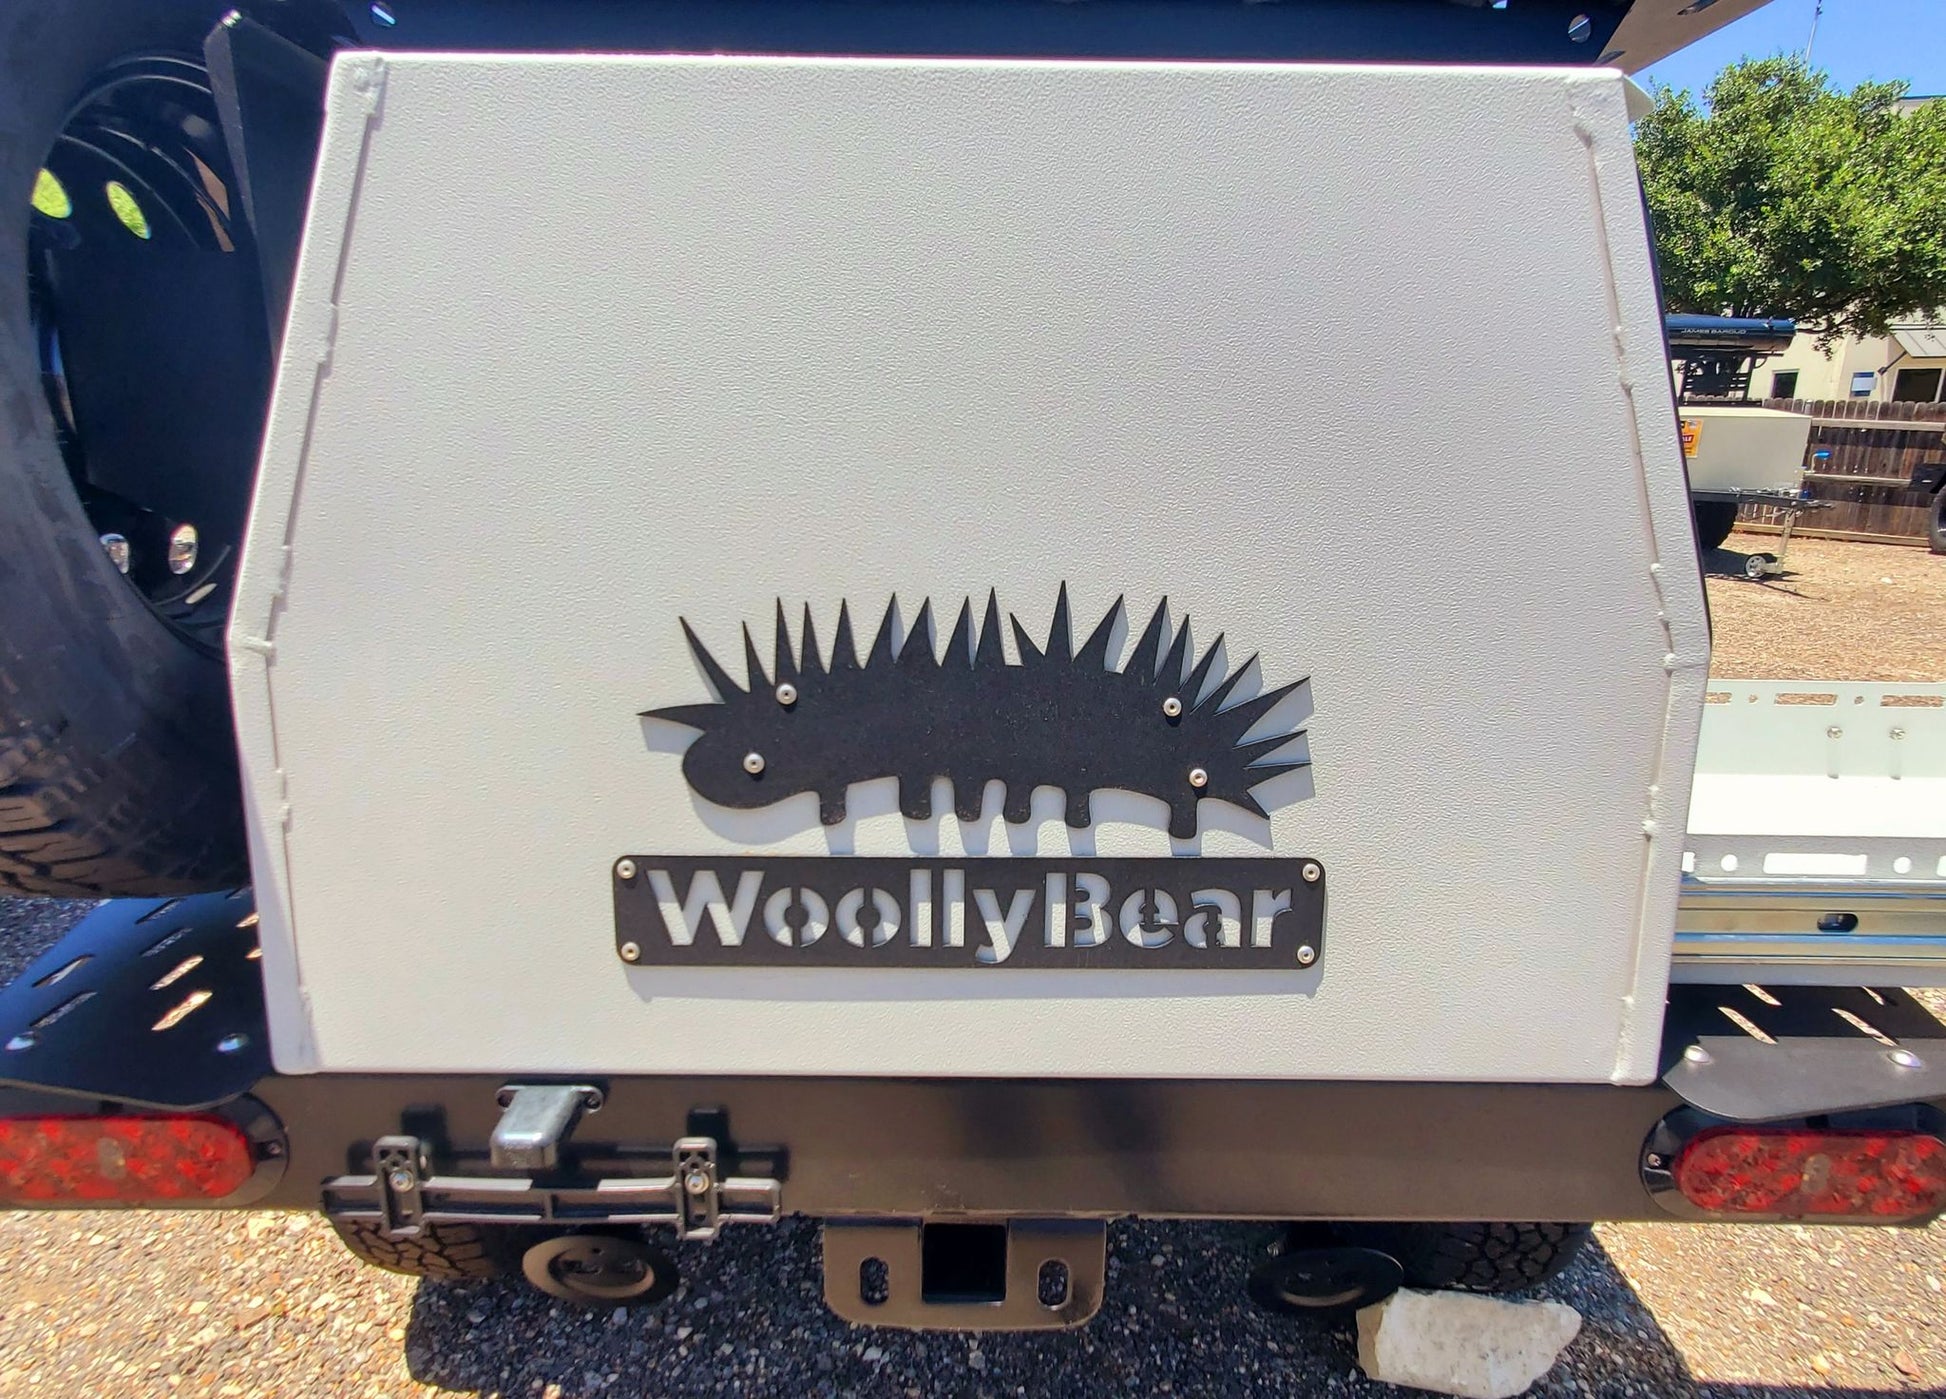 taxa outdoors woollybear base trailer for sale in san antonio texas at hawkes outdoors 2102512882